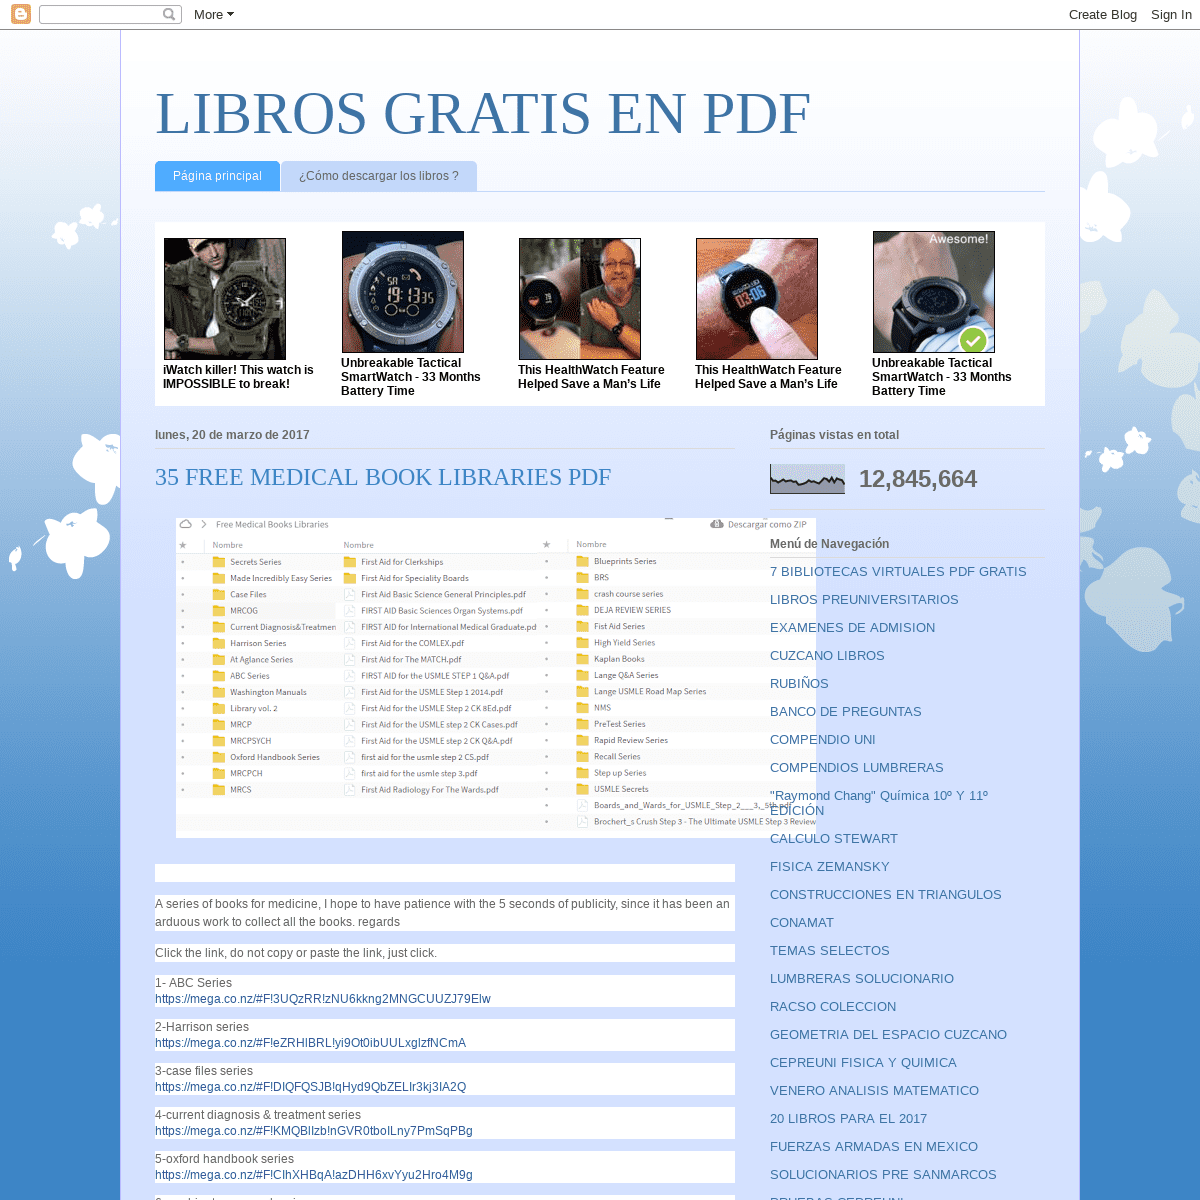 LIBROS GRATIS EN PDF